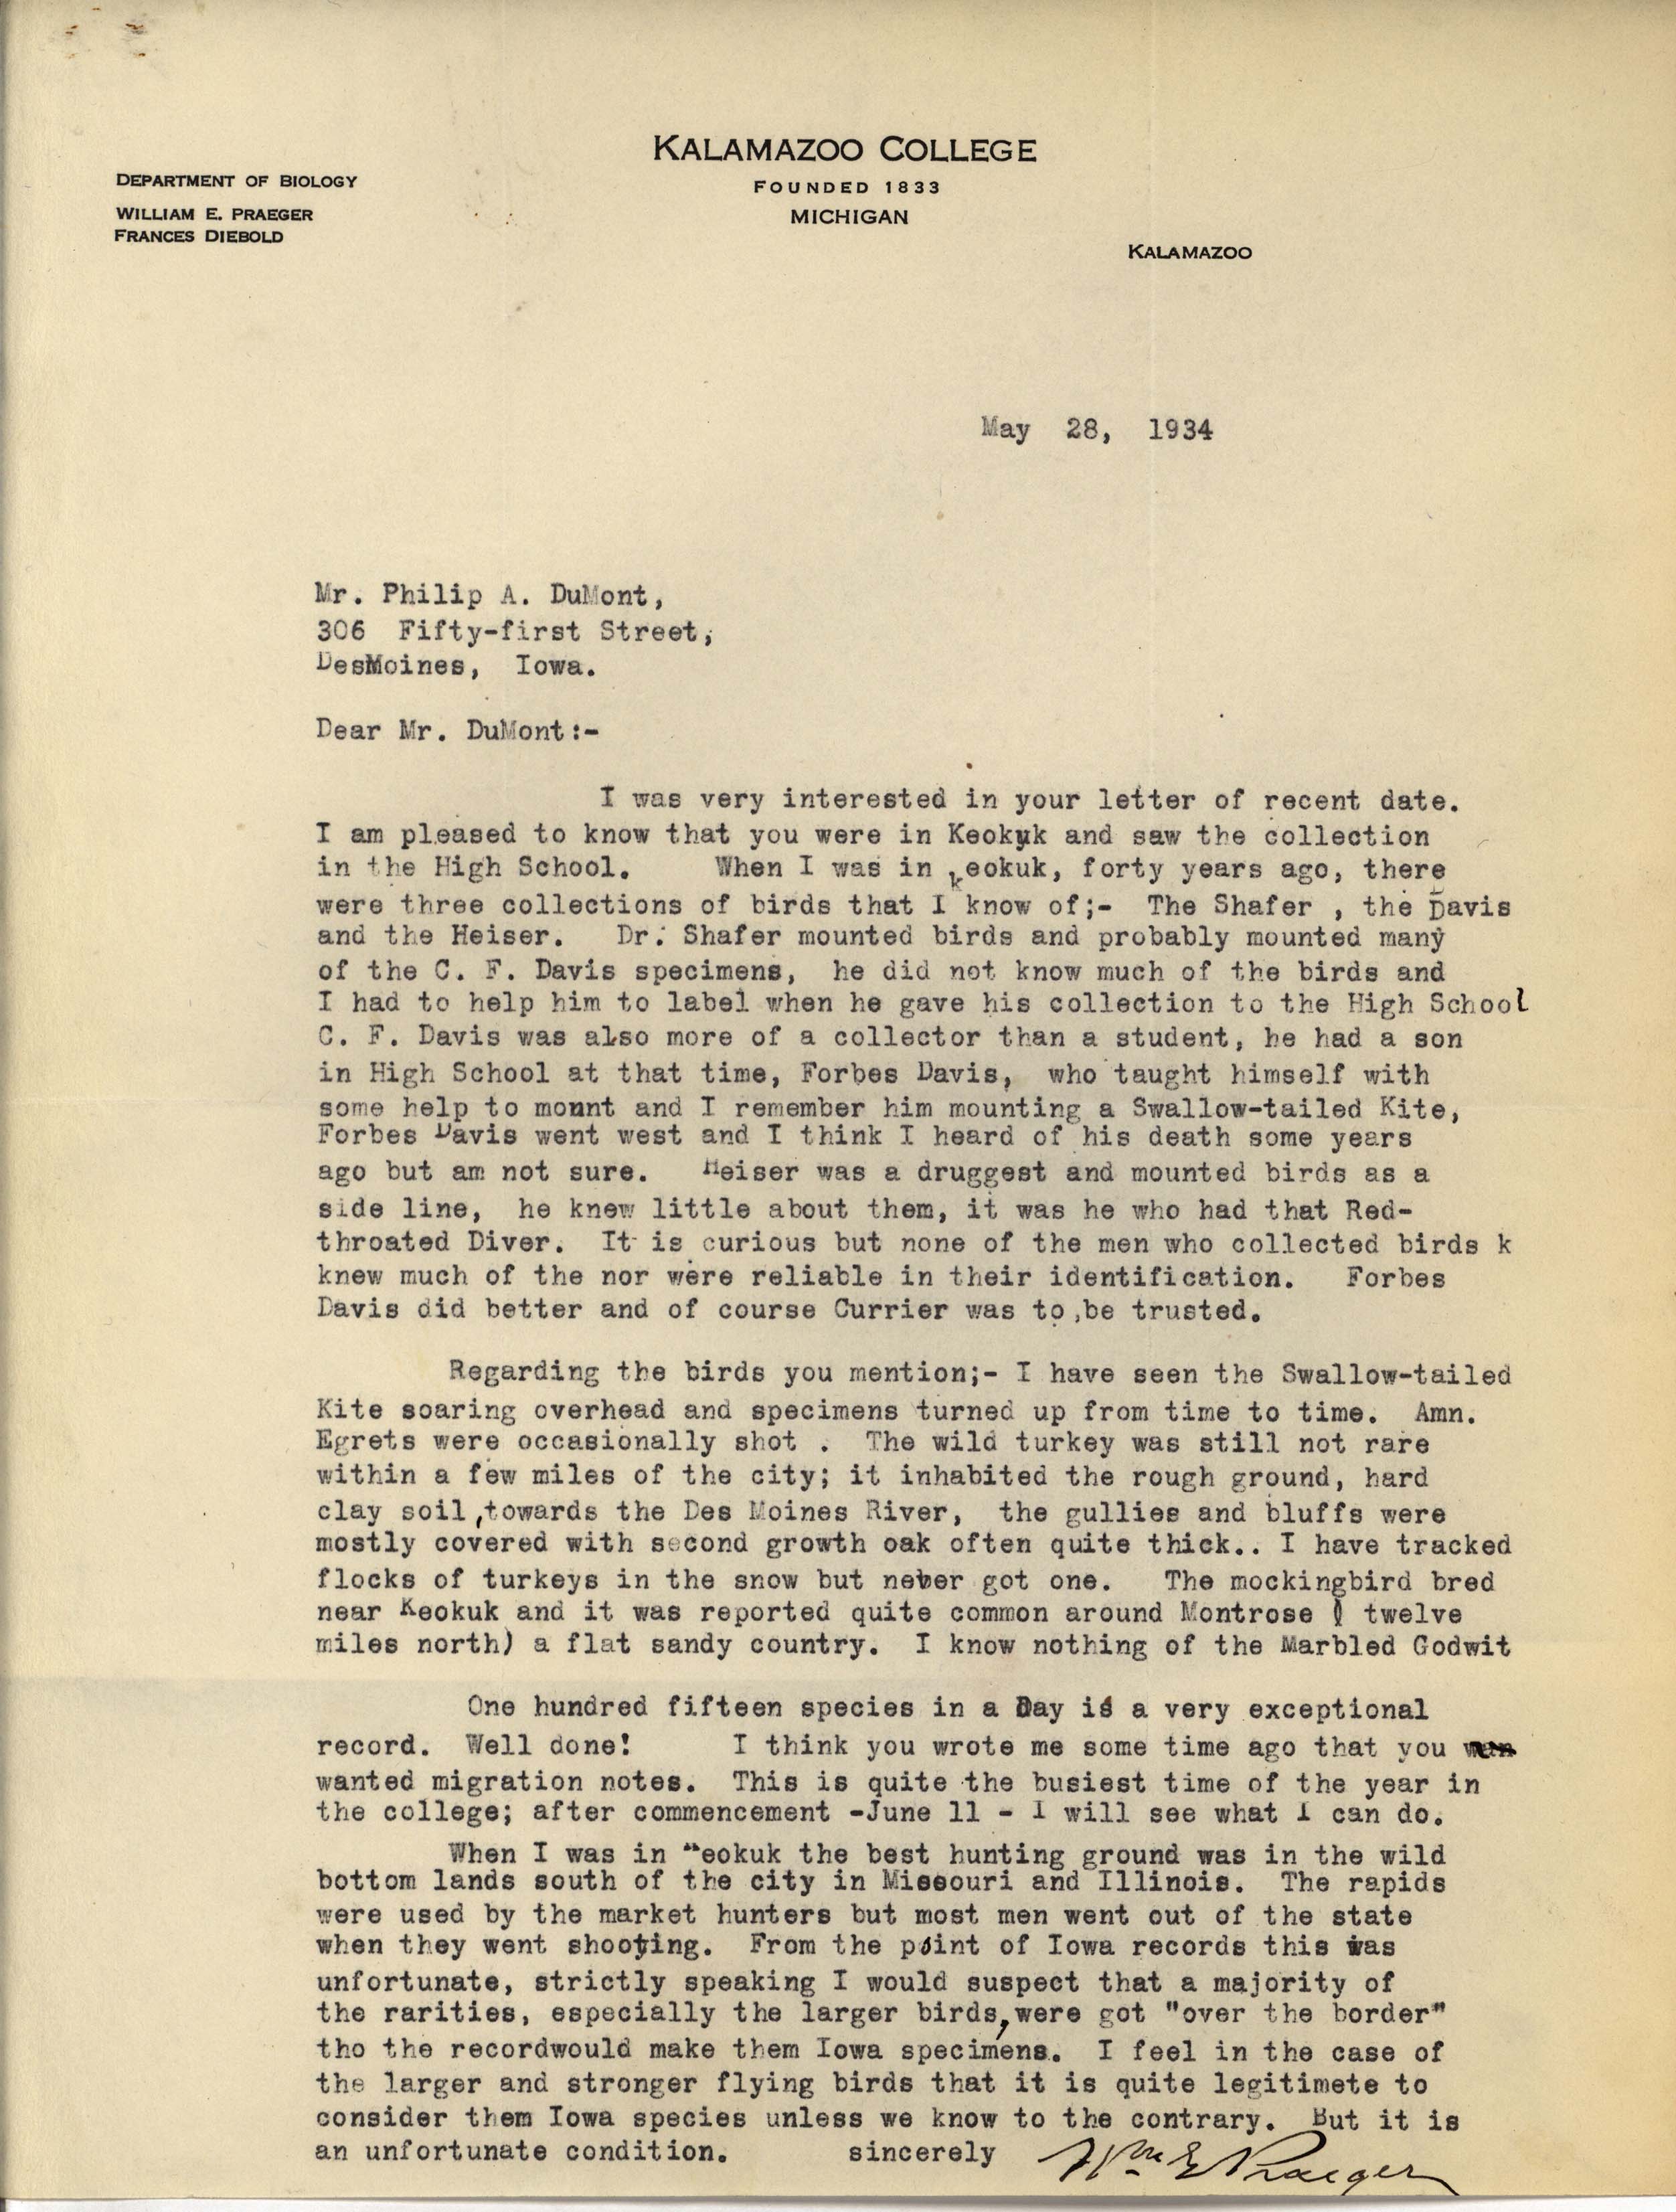 William Praeger letter to Philip DuMont regarding bird collections in Keokuk, May 28, 1934